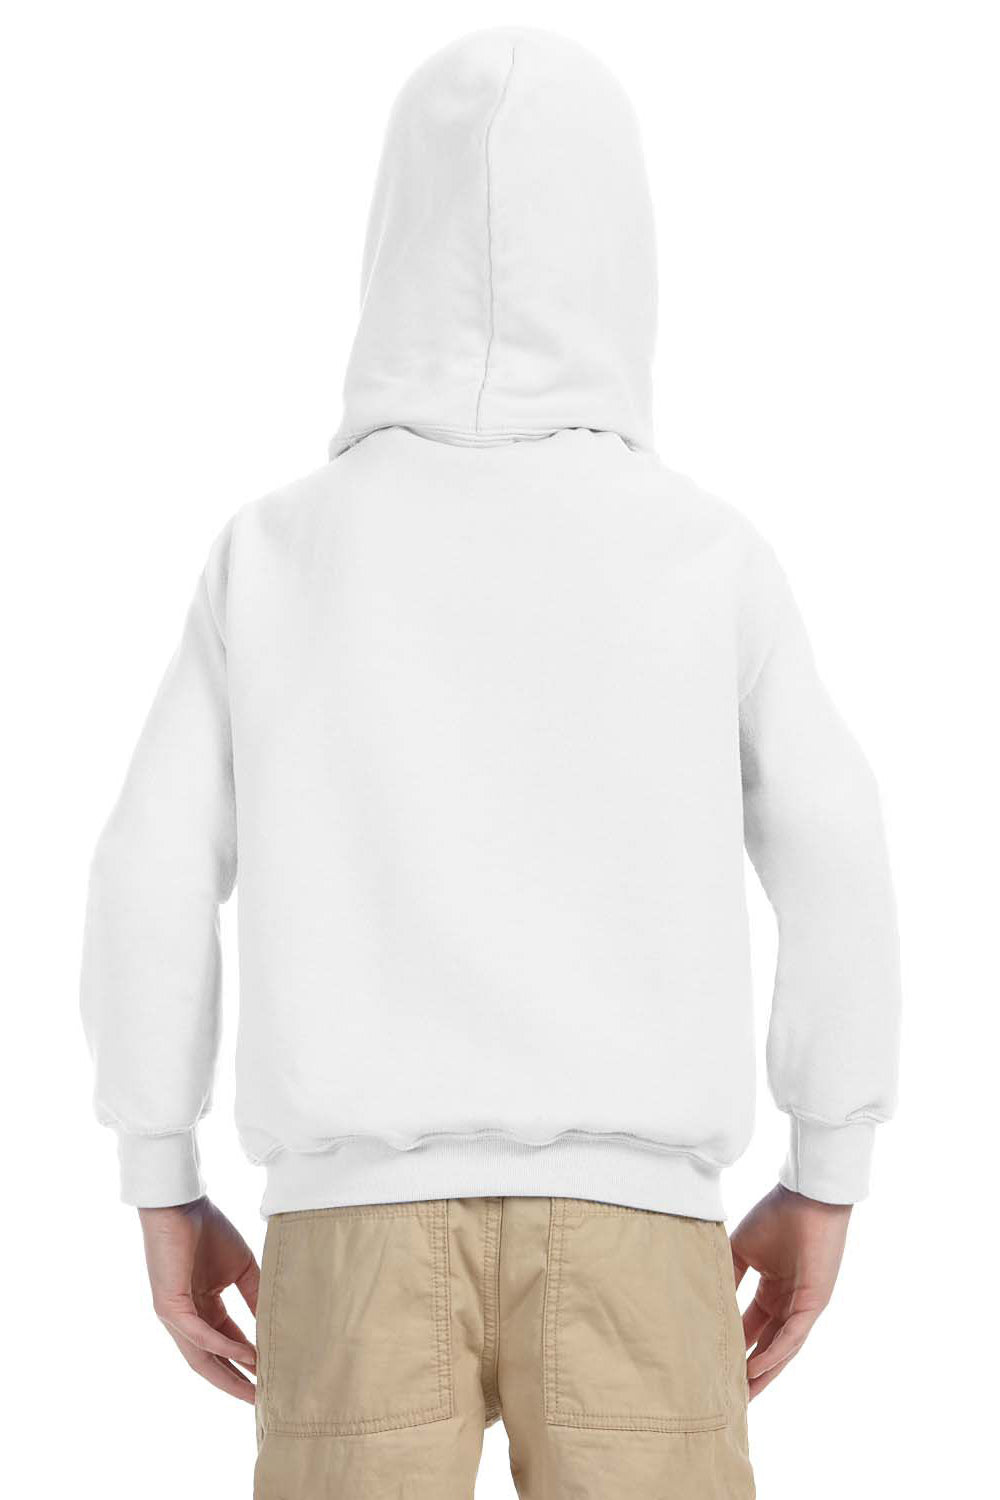 Gildan G185B Youth Hooded Sweatshirt Hoodie White Back